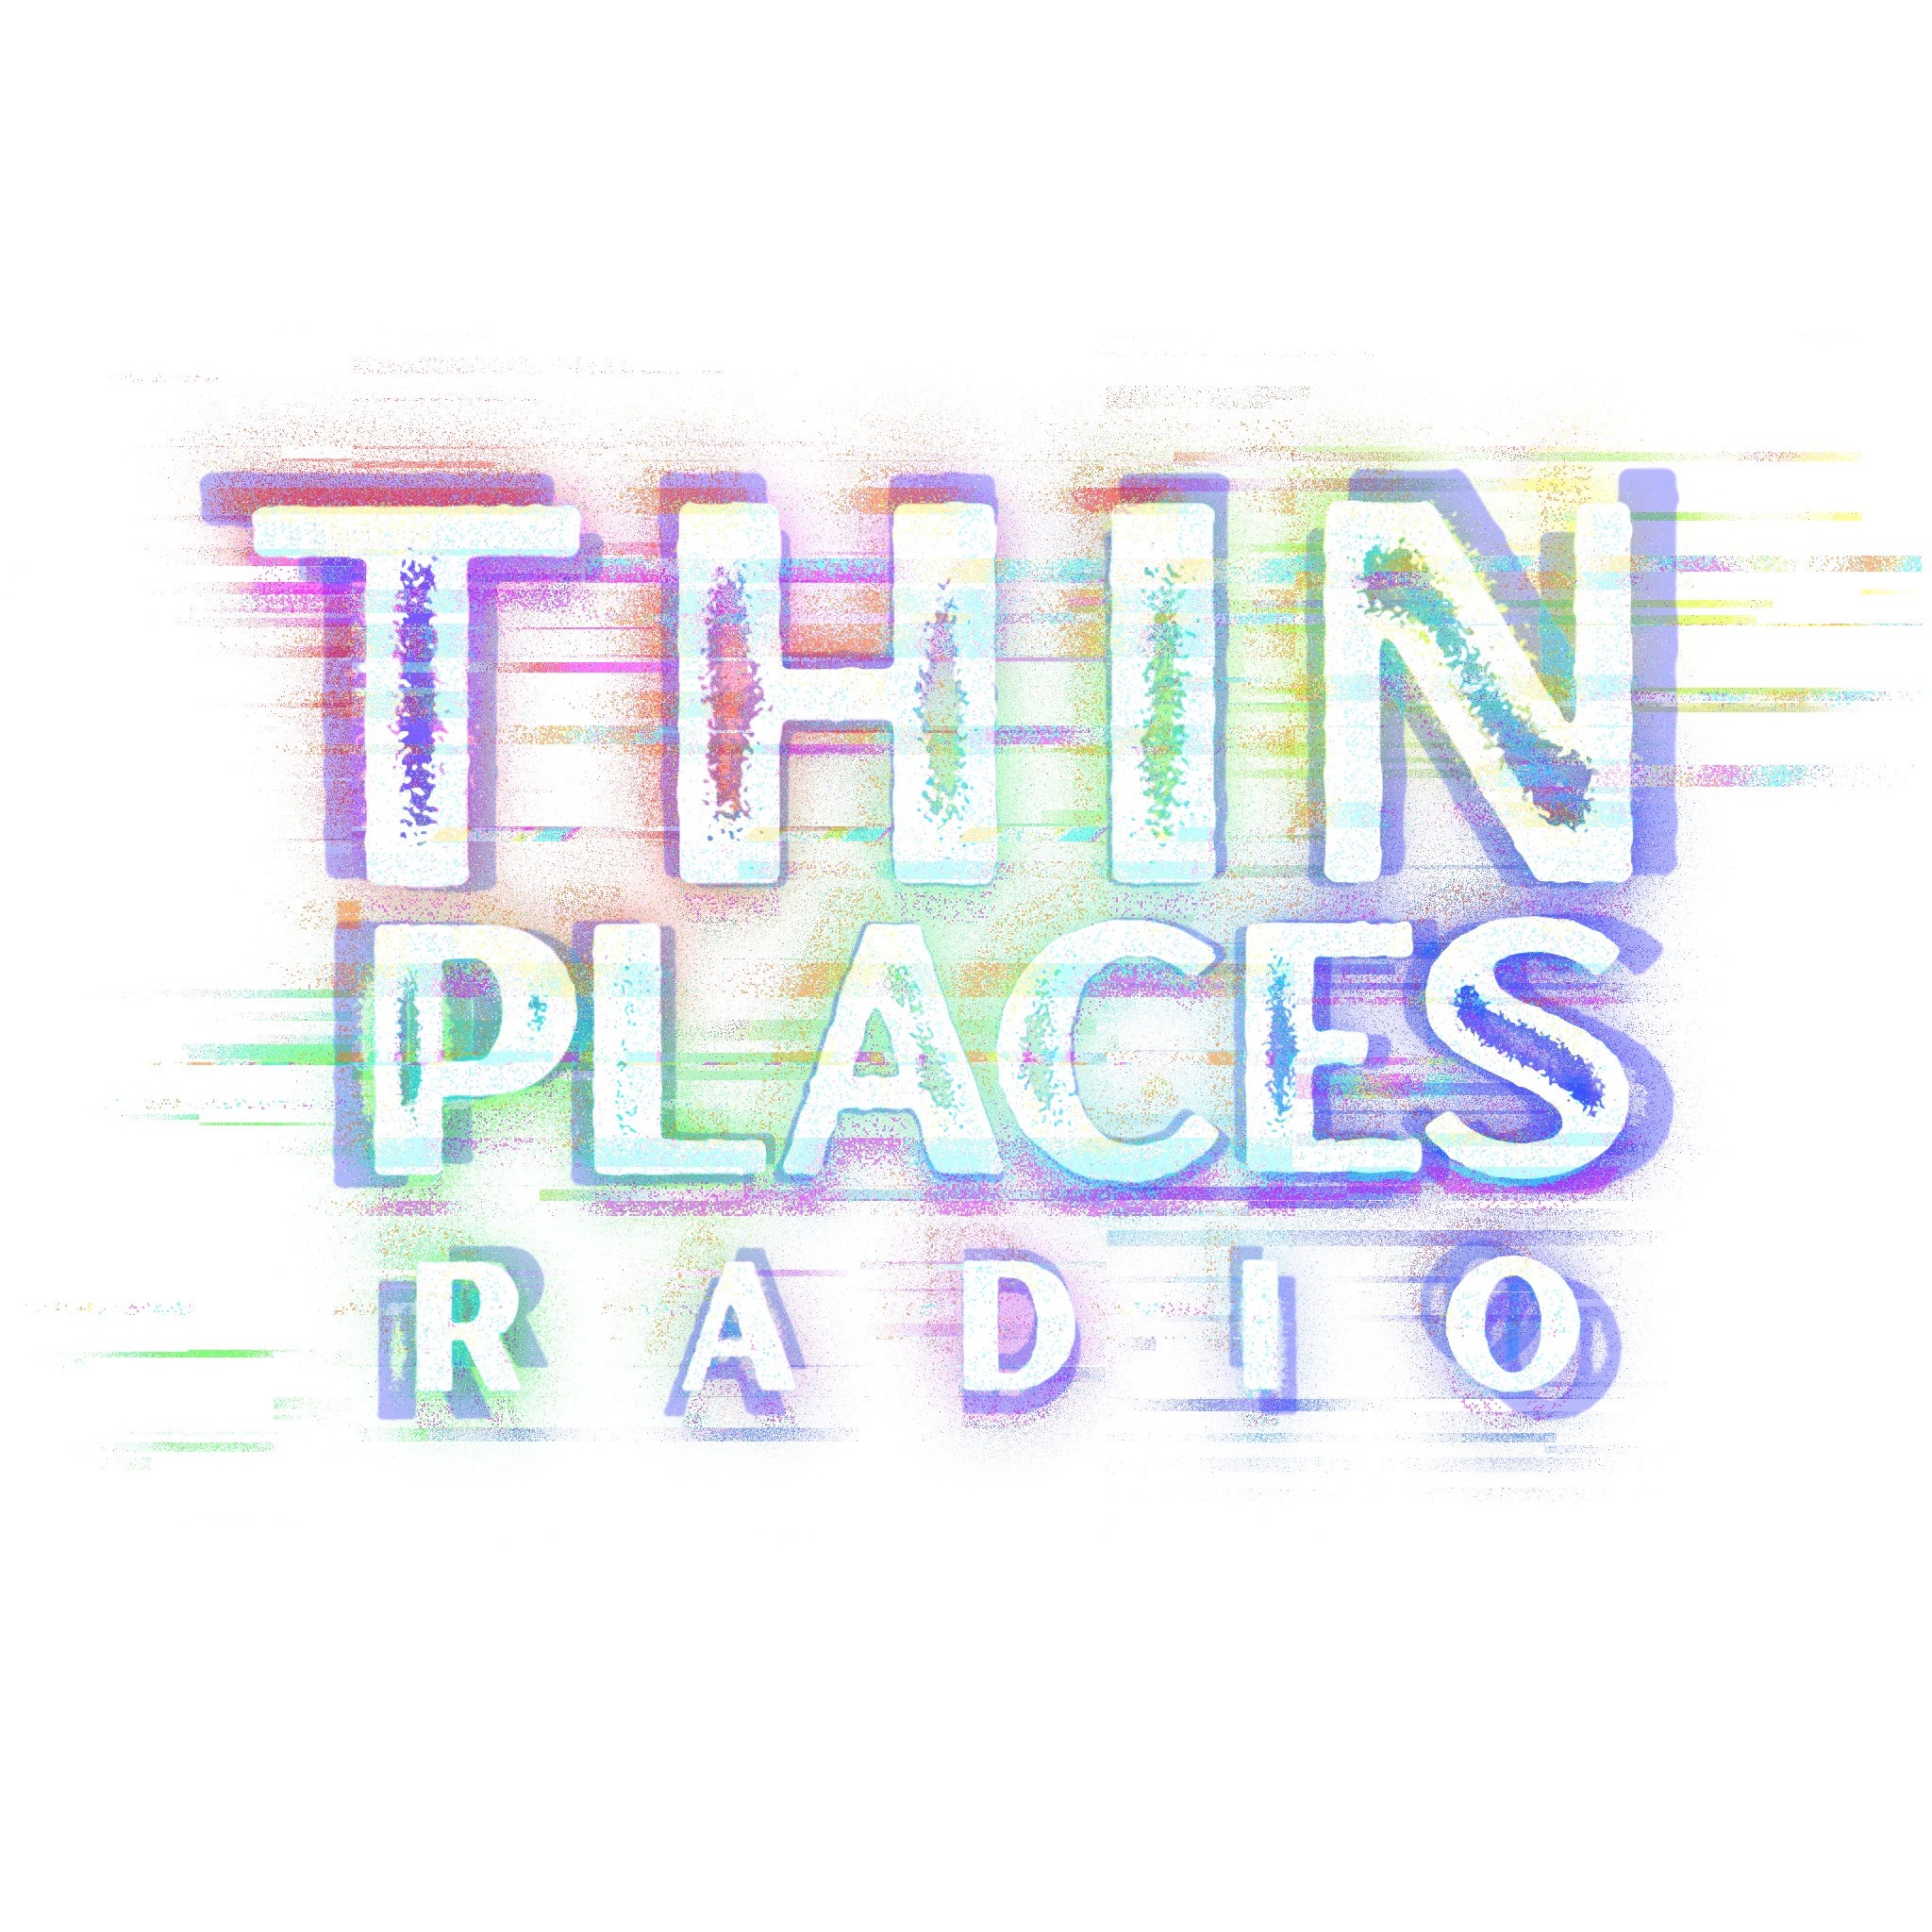 Thin Places Radio